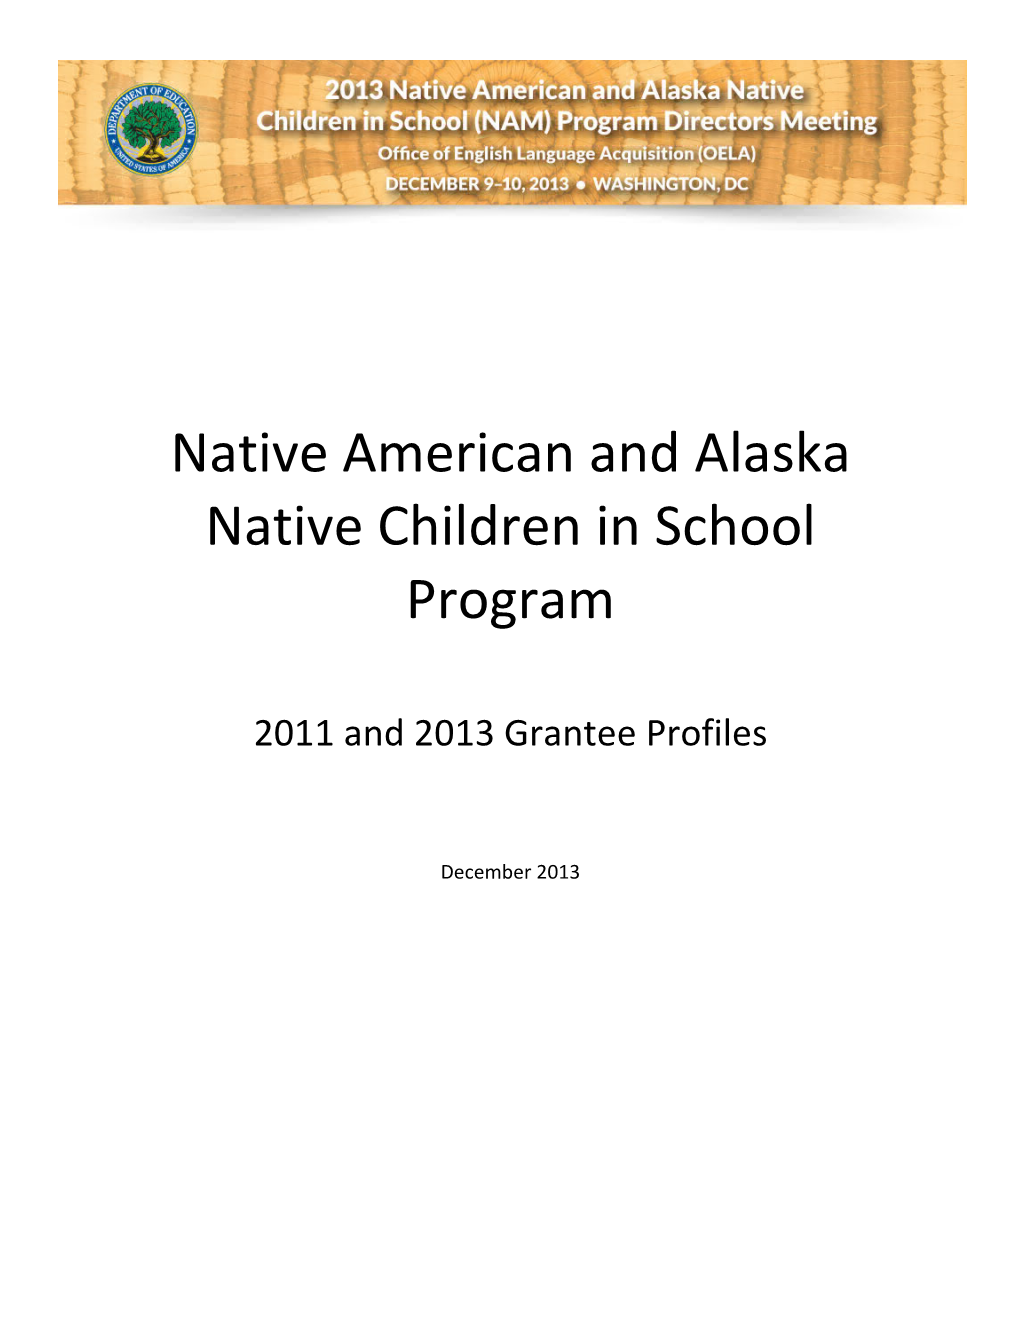 2011 and 2013 NAM Grantee Profiles